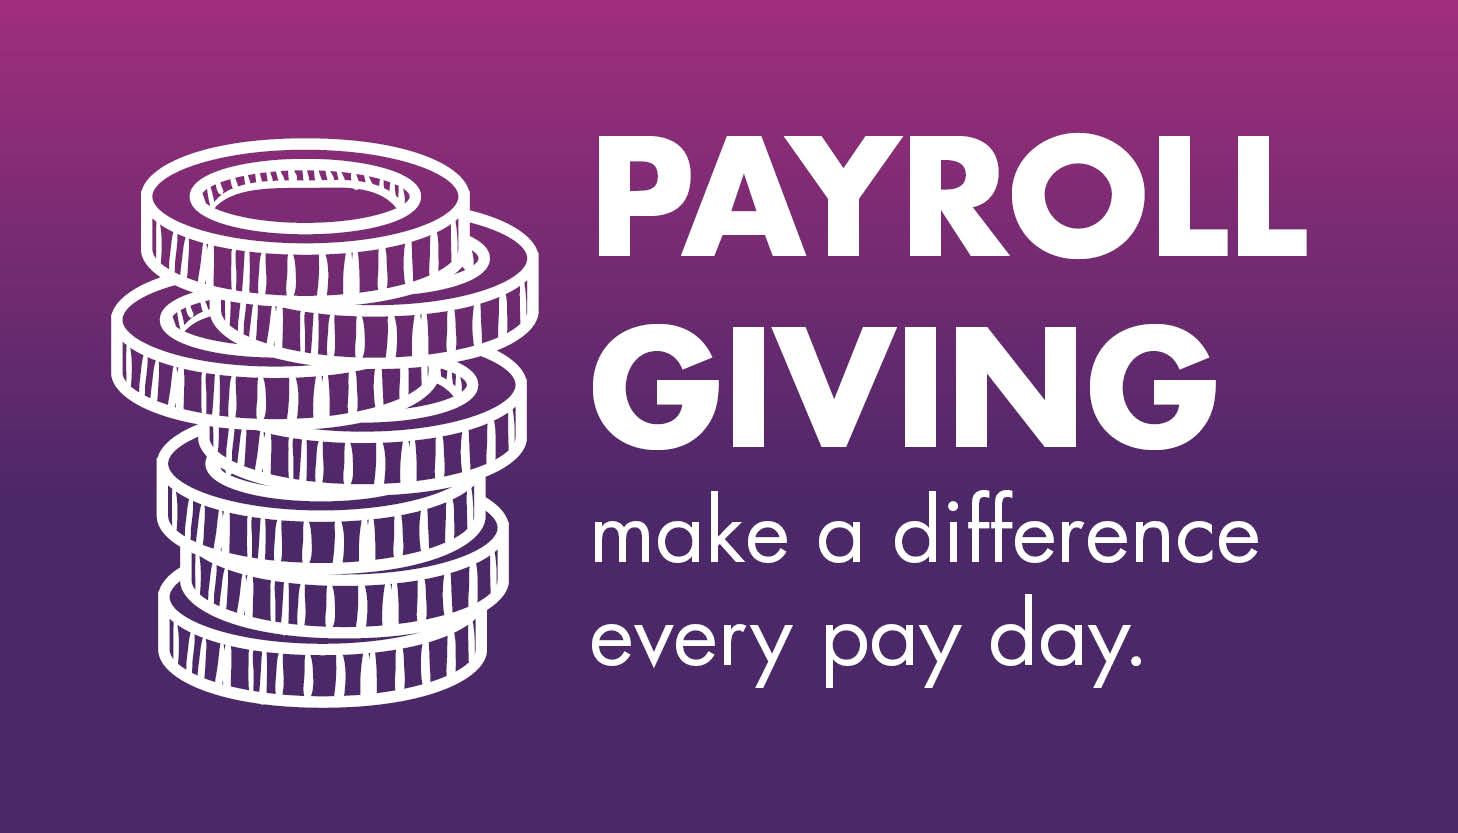 Payroll Giving 700 x 400 web image